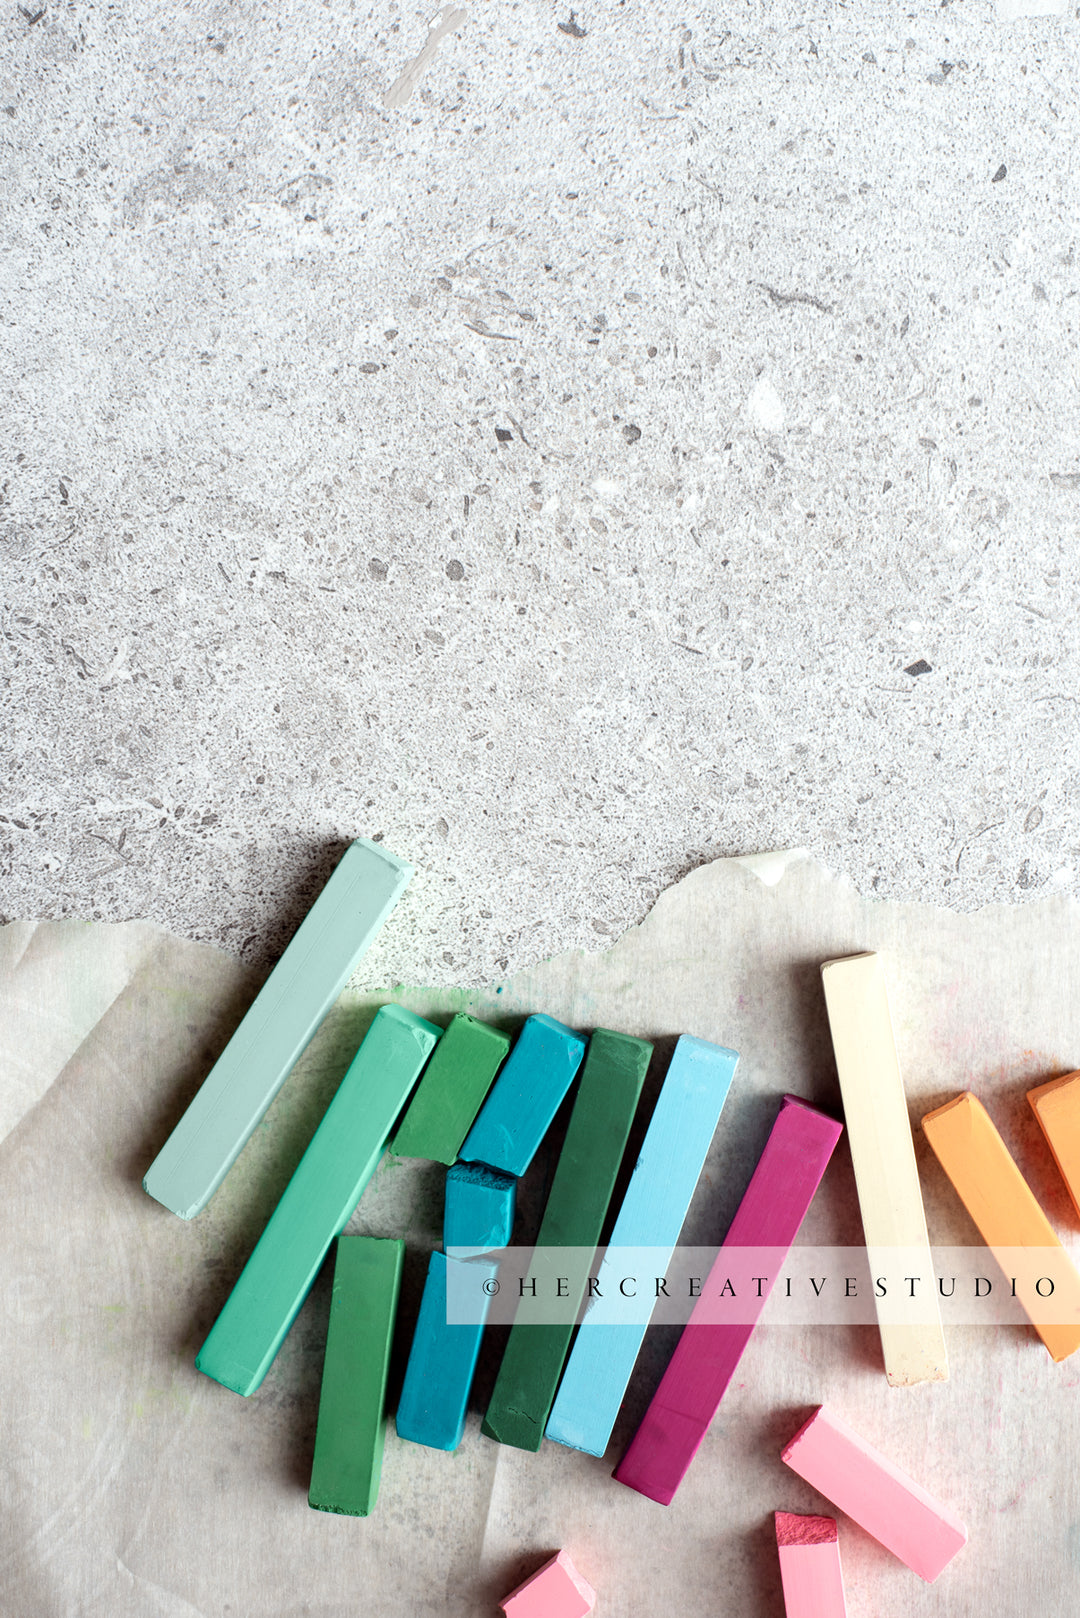 Chalk Pastels on Granite Background 2. Styled Stock Image